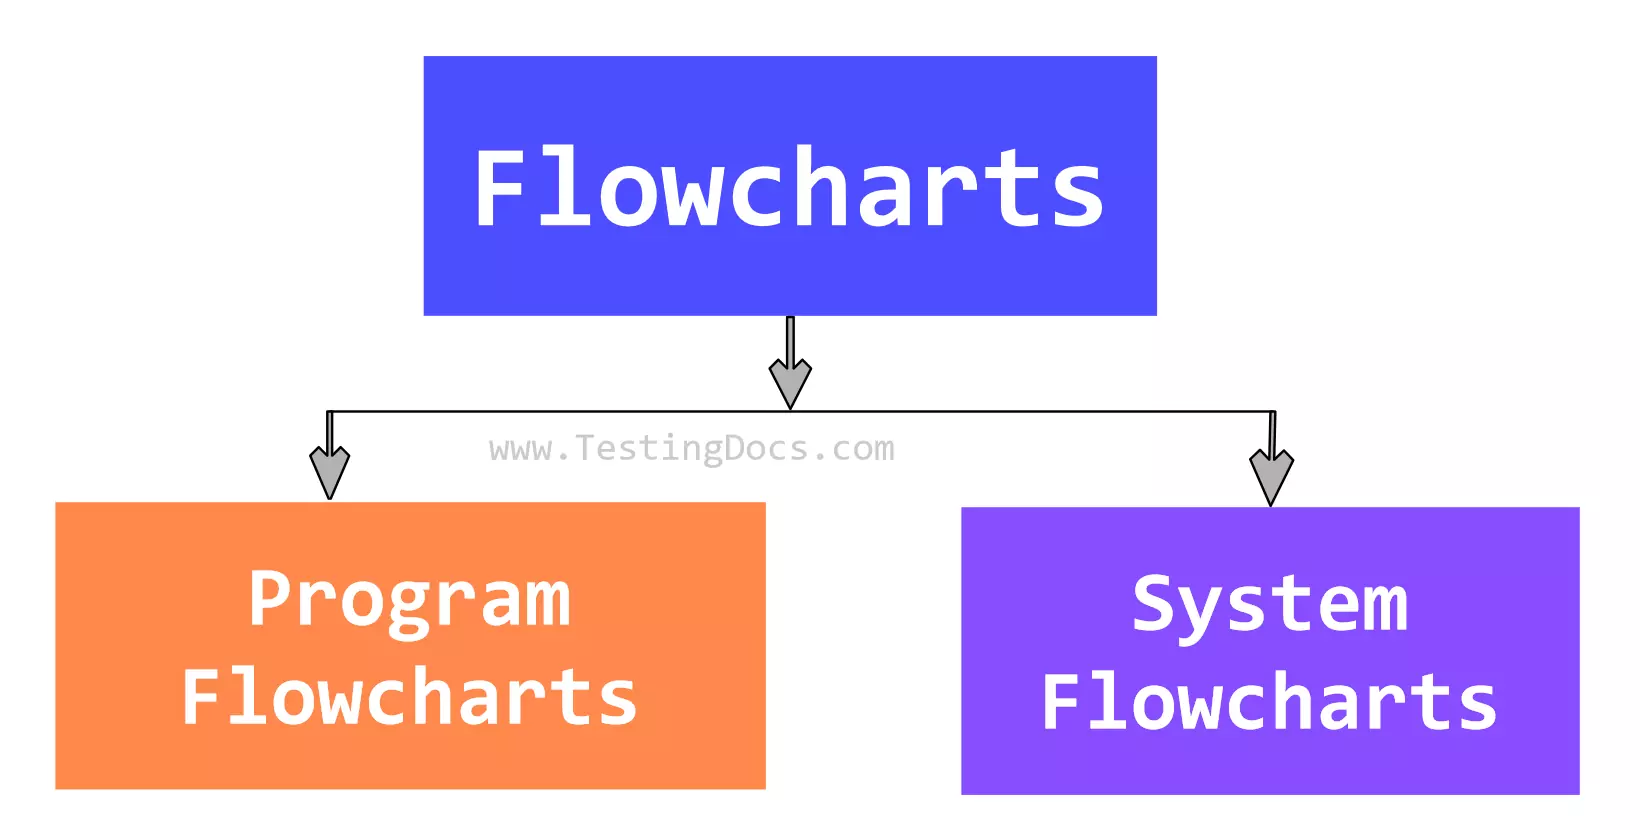 Types of Flowcharts